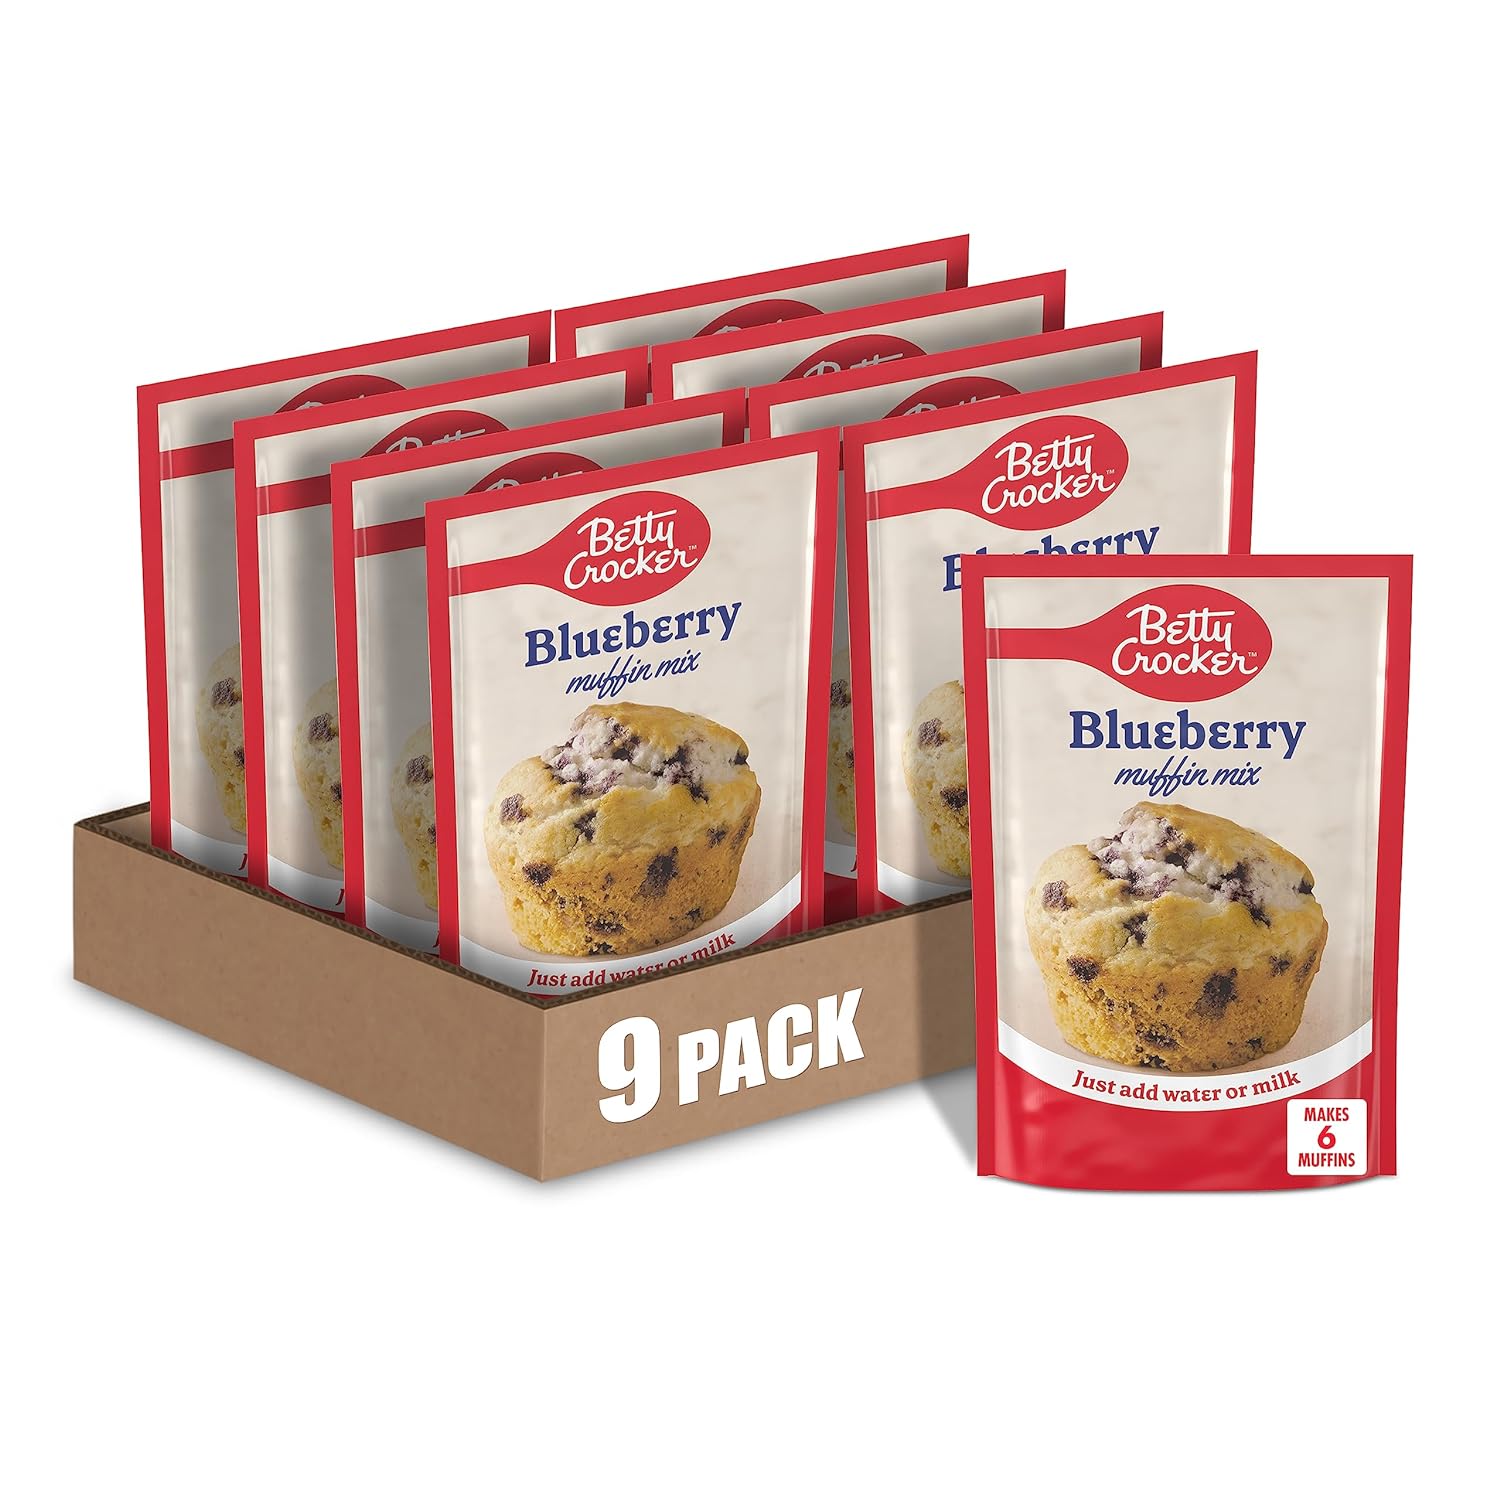 Betty Crocker Blueberry Muffin Mix, 6.5 oz (Pack of 9)